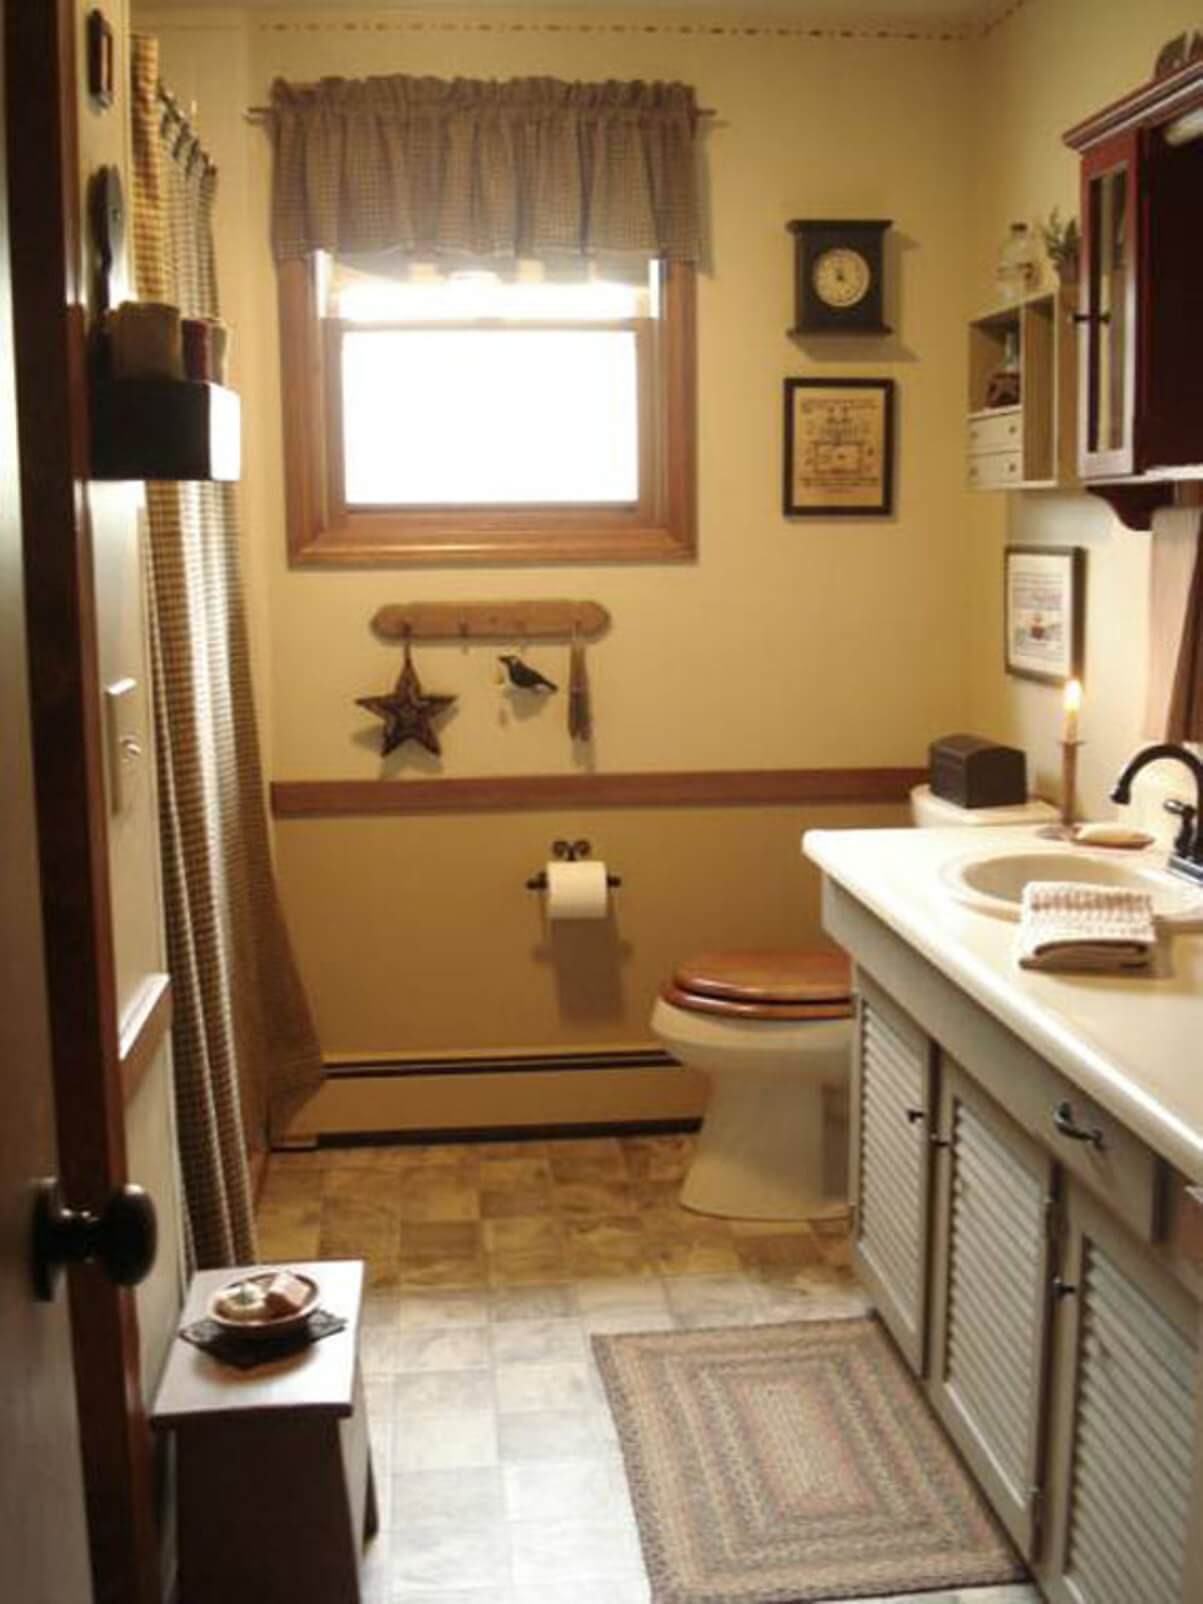 18 Small Rustic Bathroom Ideas You Ll Love August 18 Houzz